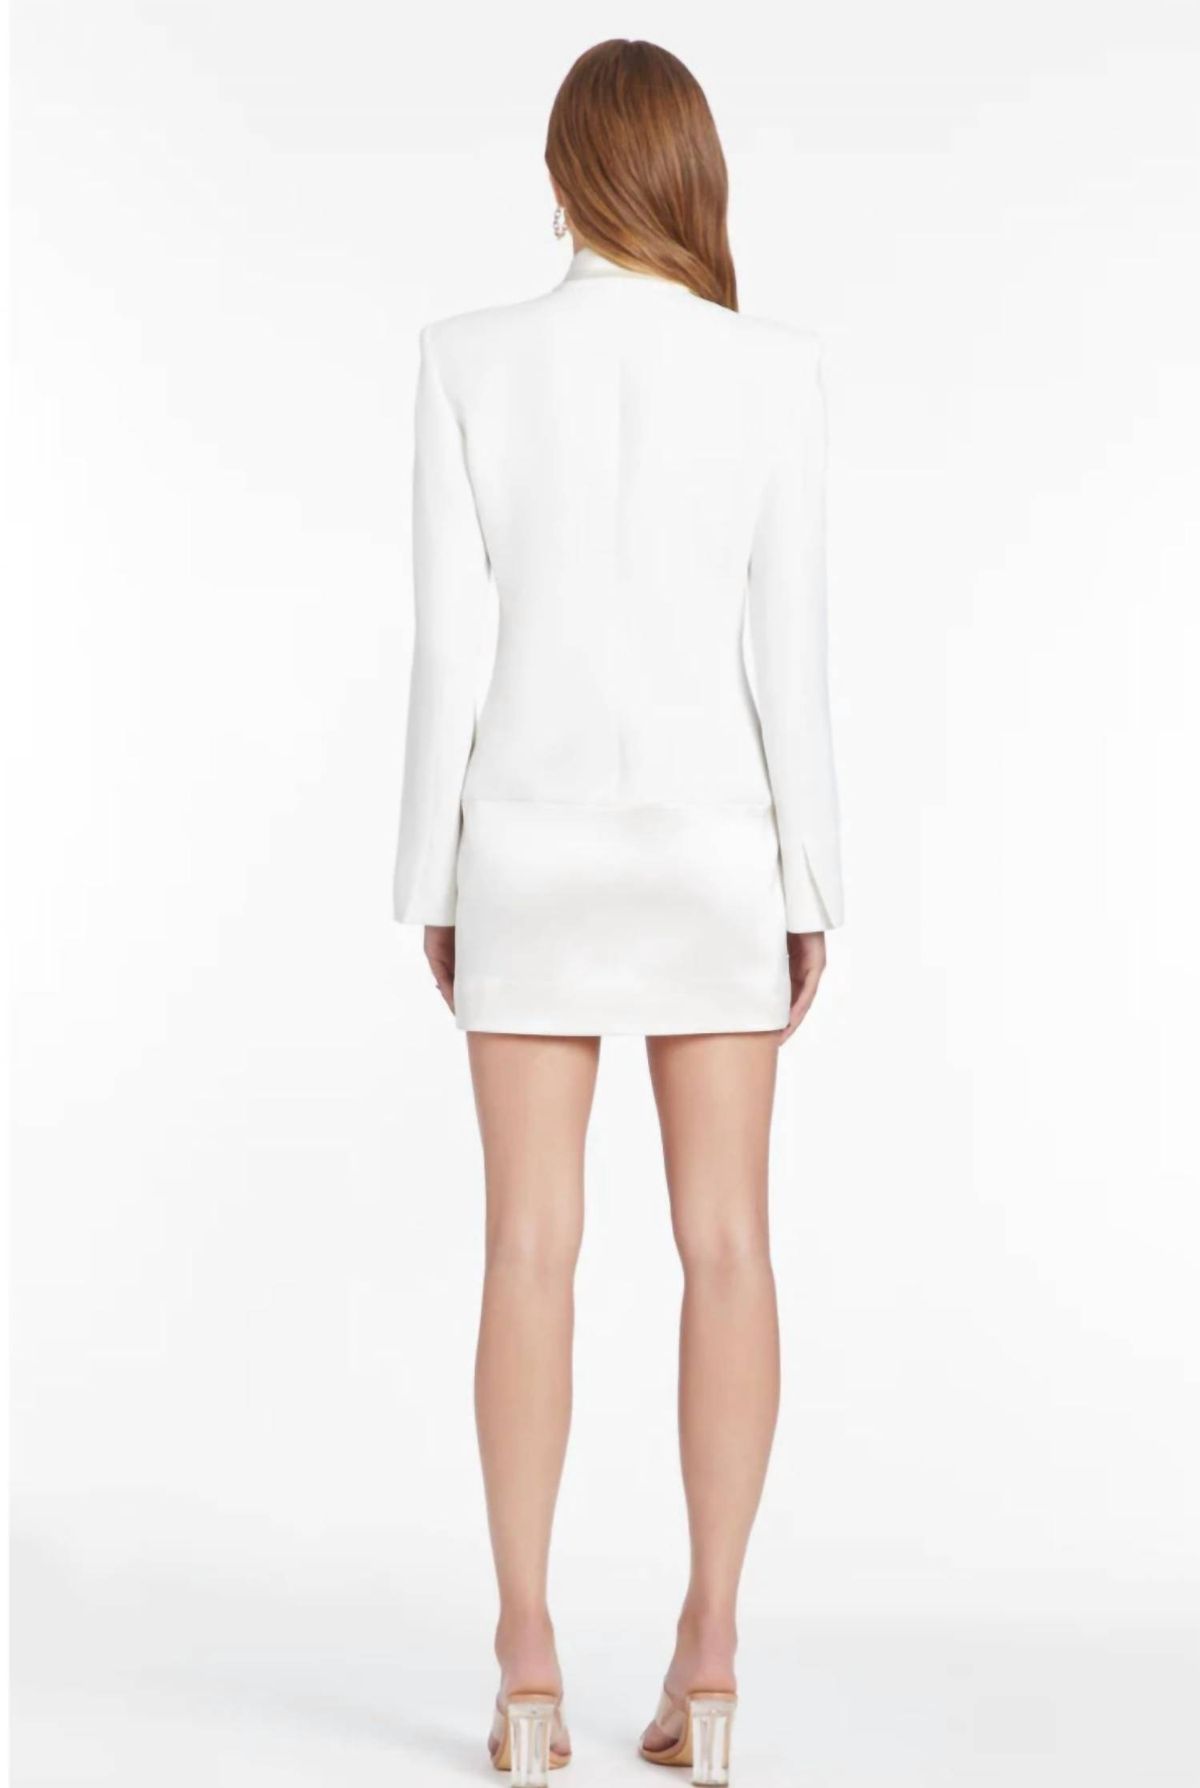 Style 1-2193251561-70 Amanda Uprichard Size XS Blazer White Cocktail Dress on Queenly